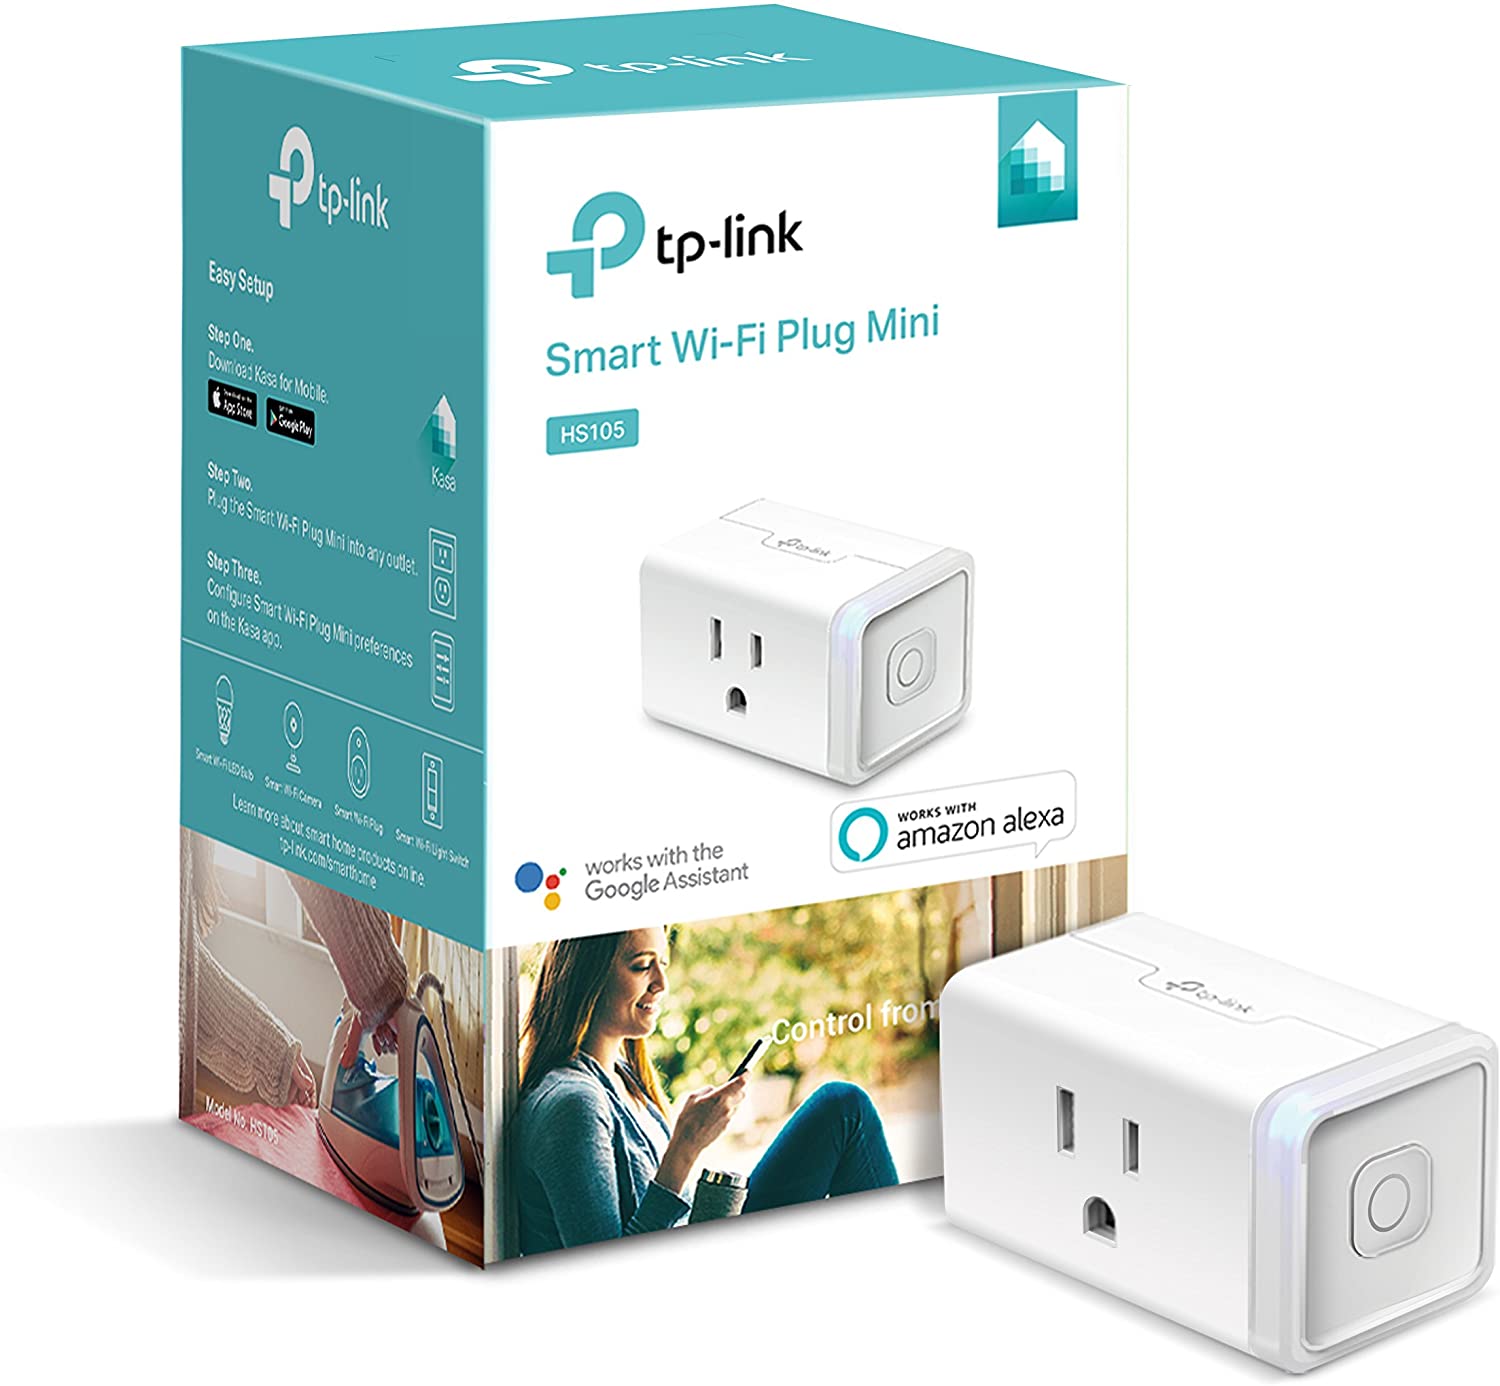 Kasa Smart Plug Ultra Mini 15A Smart Home Wi-Fi Outlet Works with Alexa  Googl